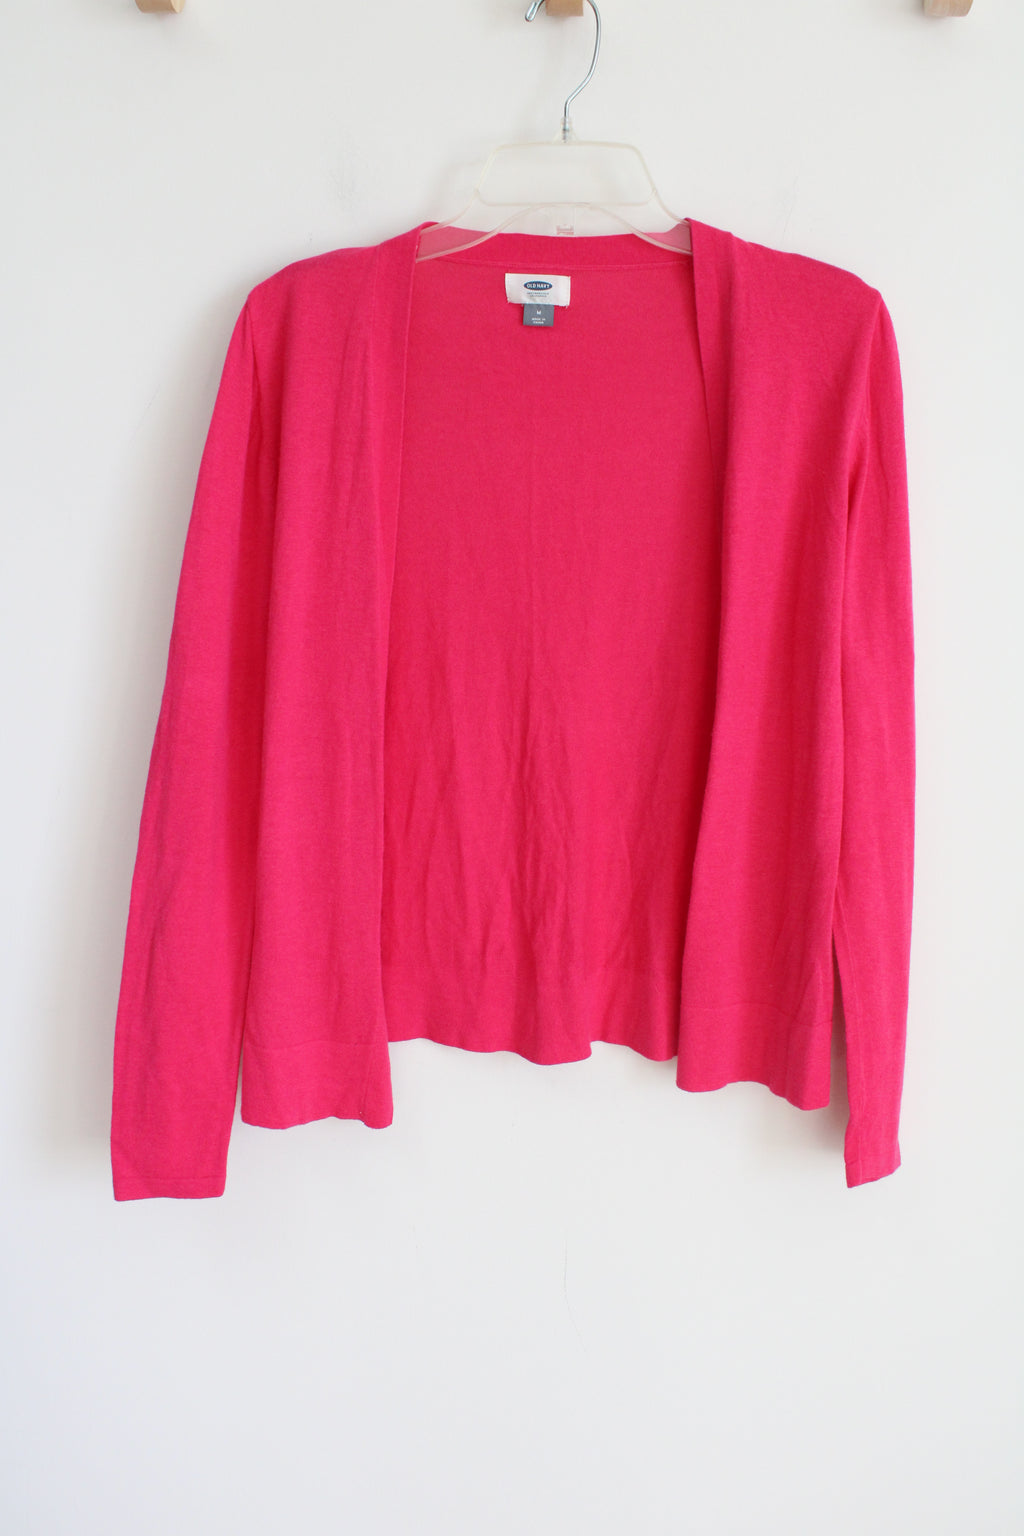 Old Navy Hot Pink Lightweight Knit Cardigan | M